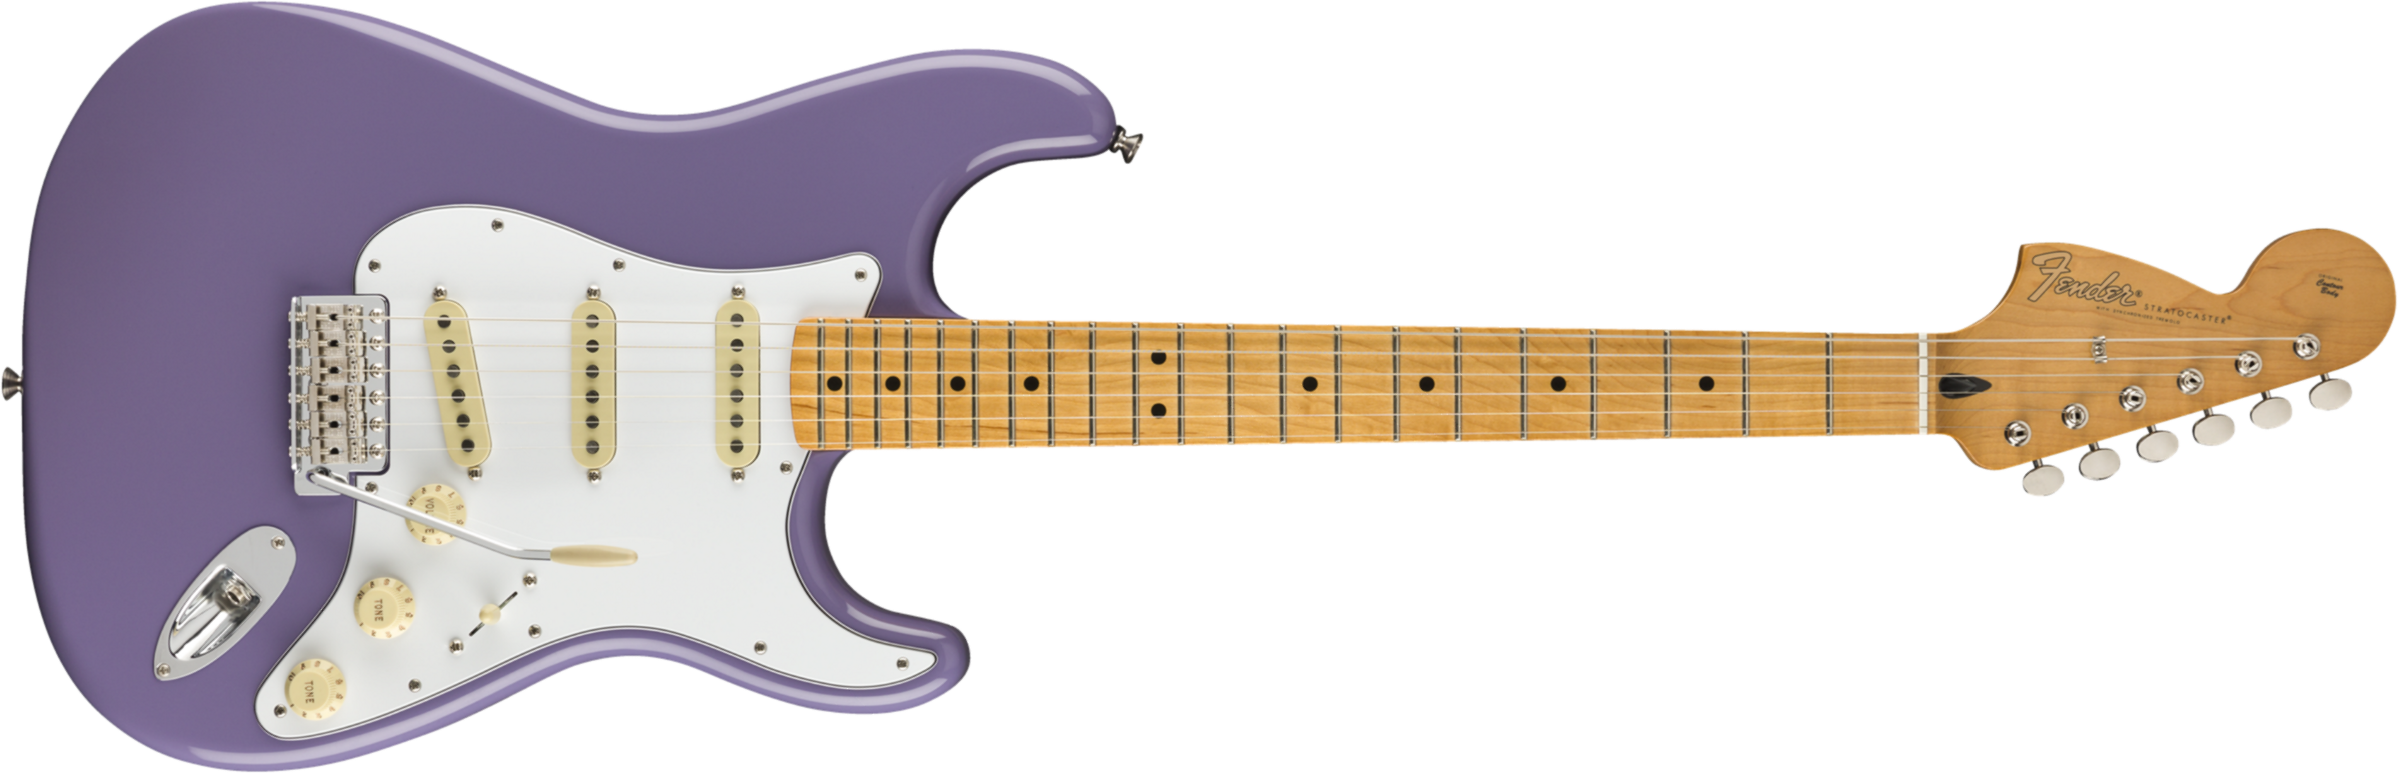 Fender Jimi Hendrix Strat Signature 2018 Mn - Ultra Violet - E-Gitarre in Str-Form - Main picture